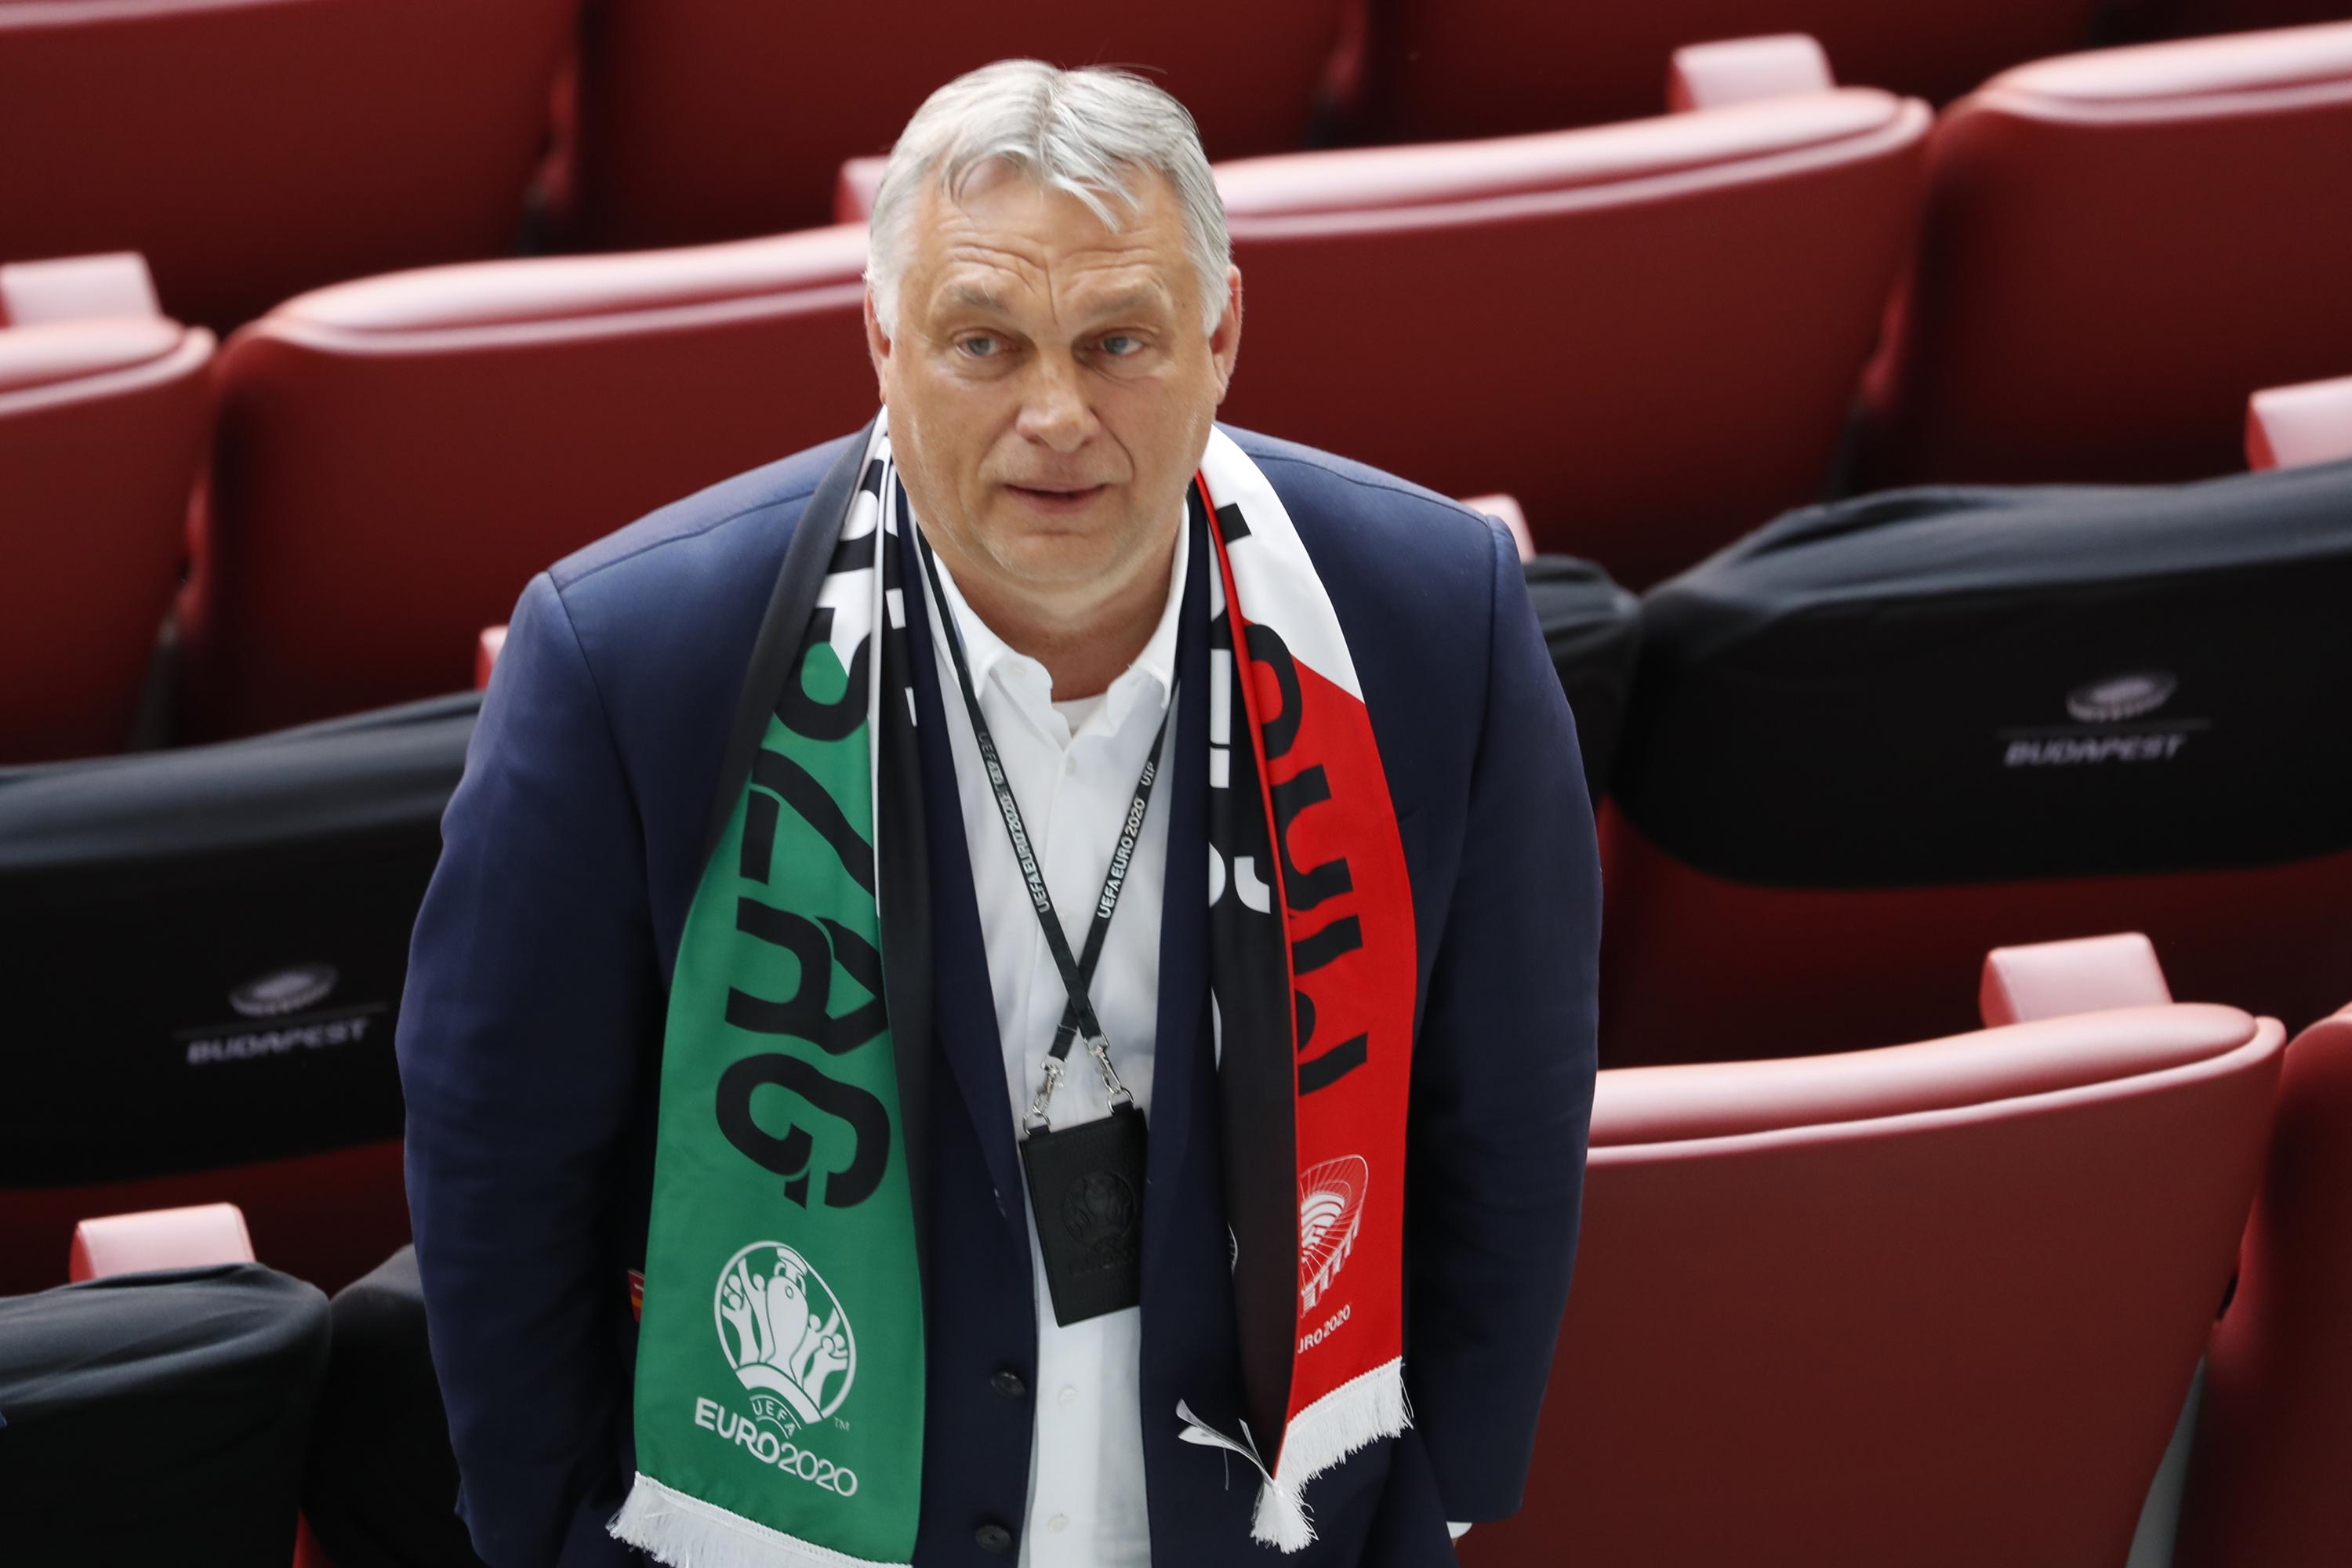 UEFA defends Munich rainbow ban, says LGBT flag is 'not political symbol